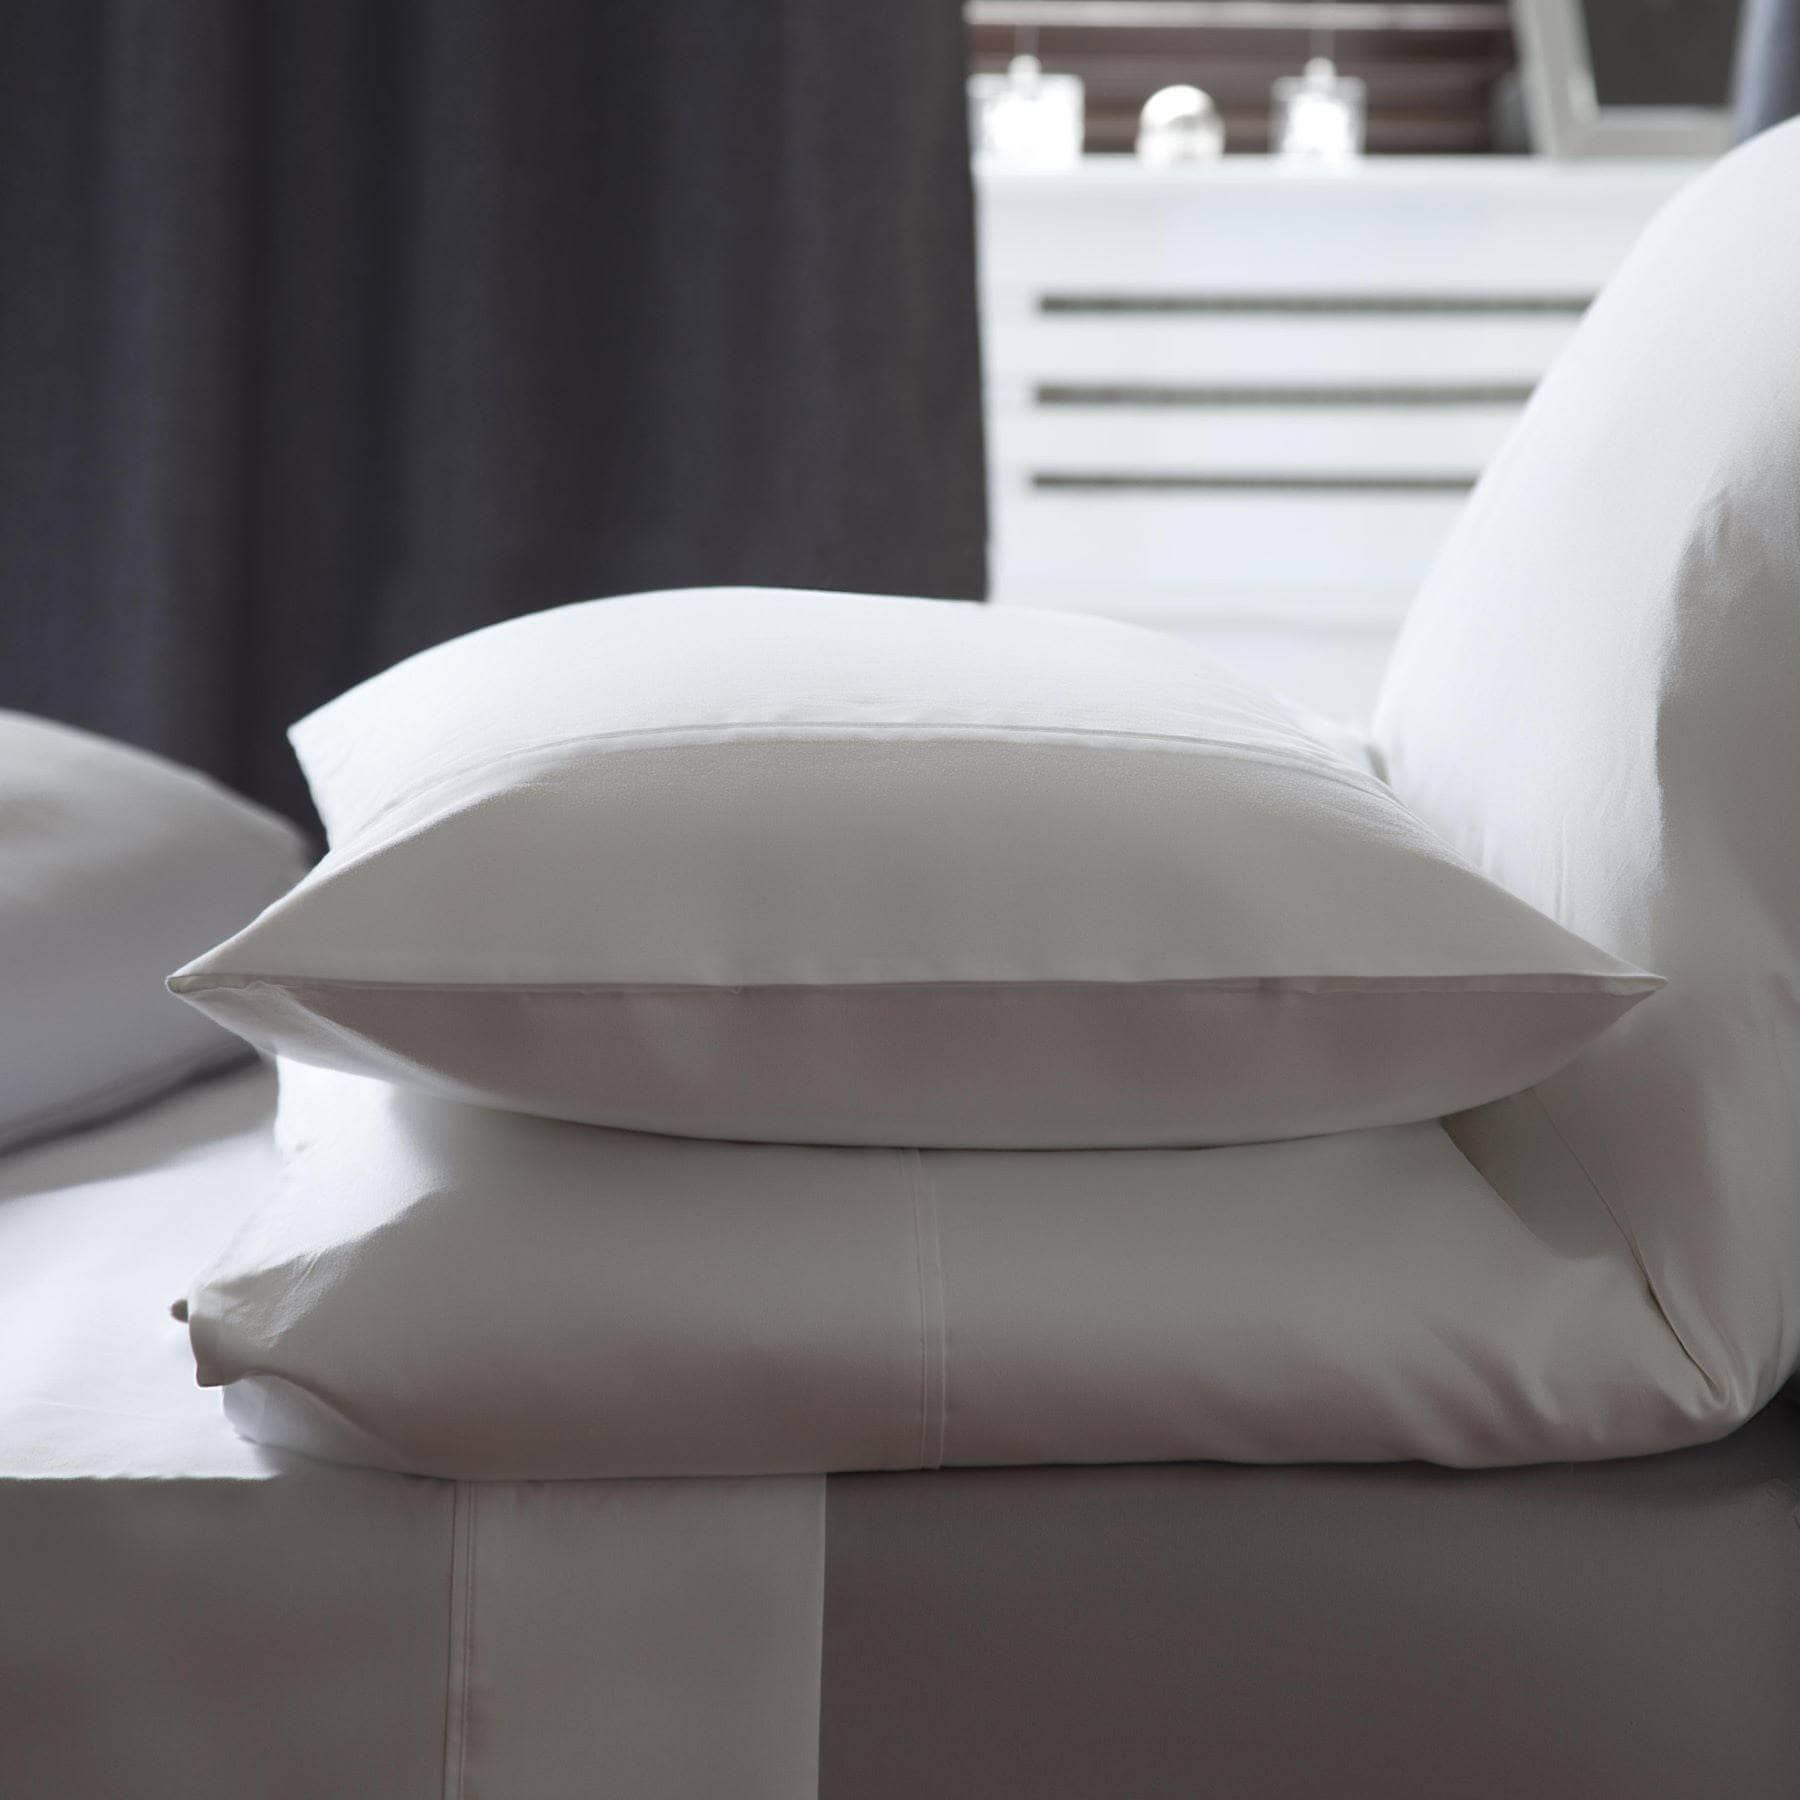 Homeware  -  Brushed Cotton Pillowcase Pair - White  -  60009876